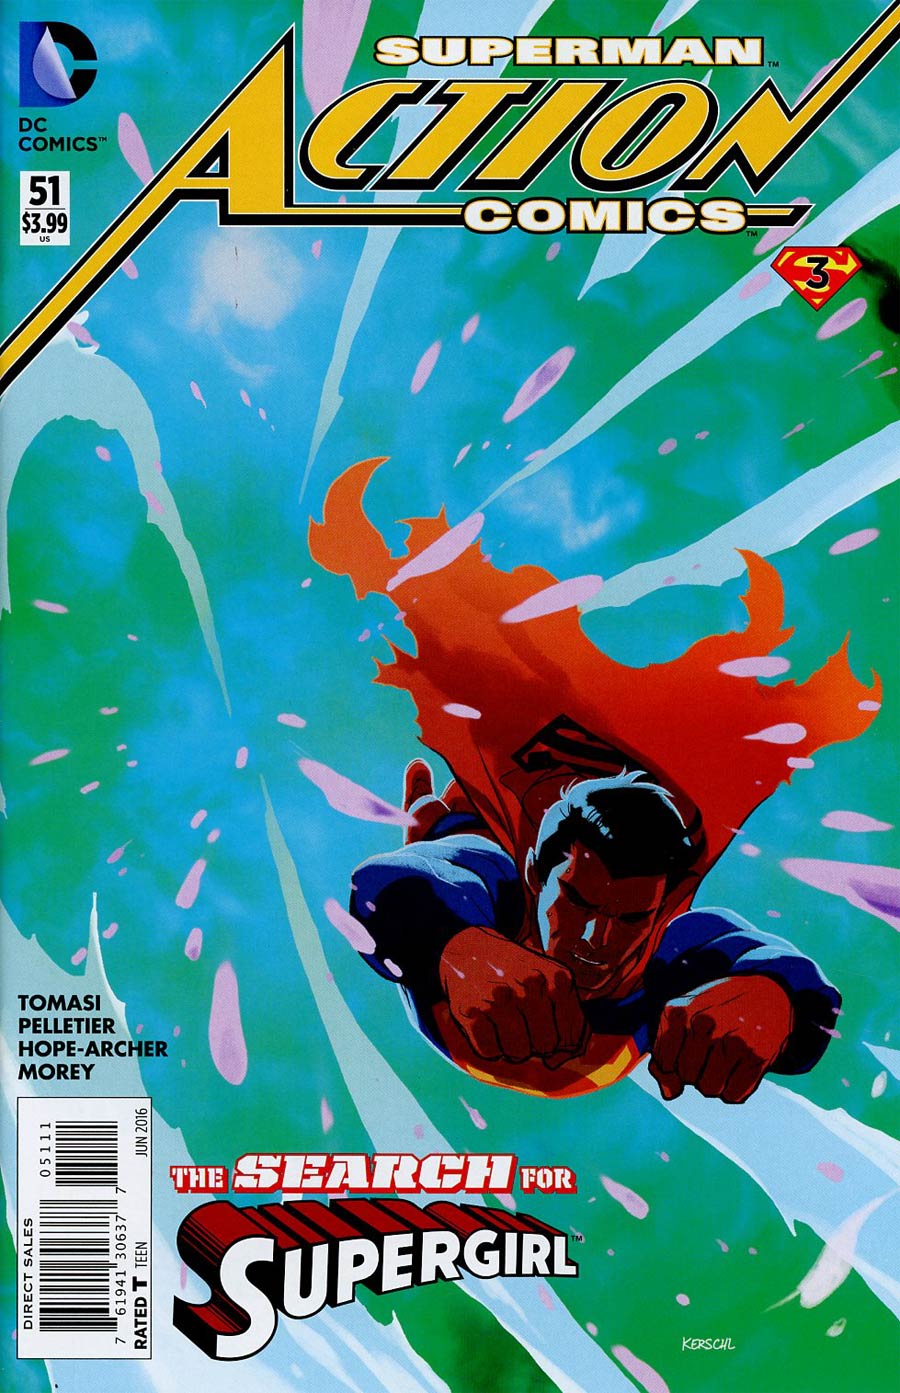 Action Comics #51